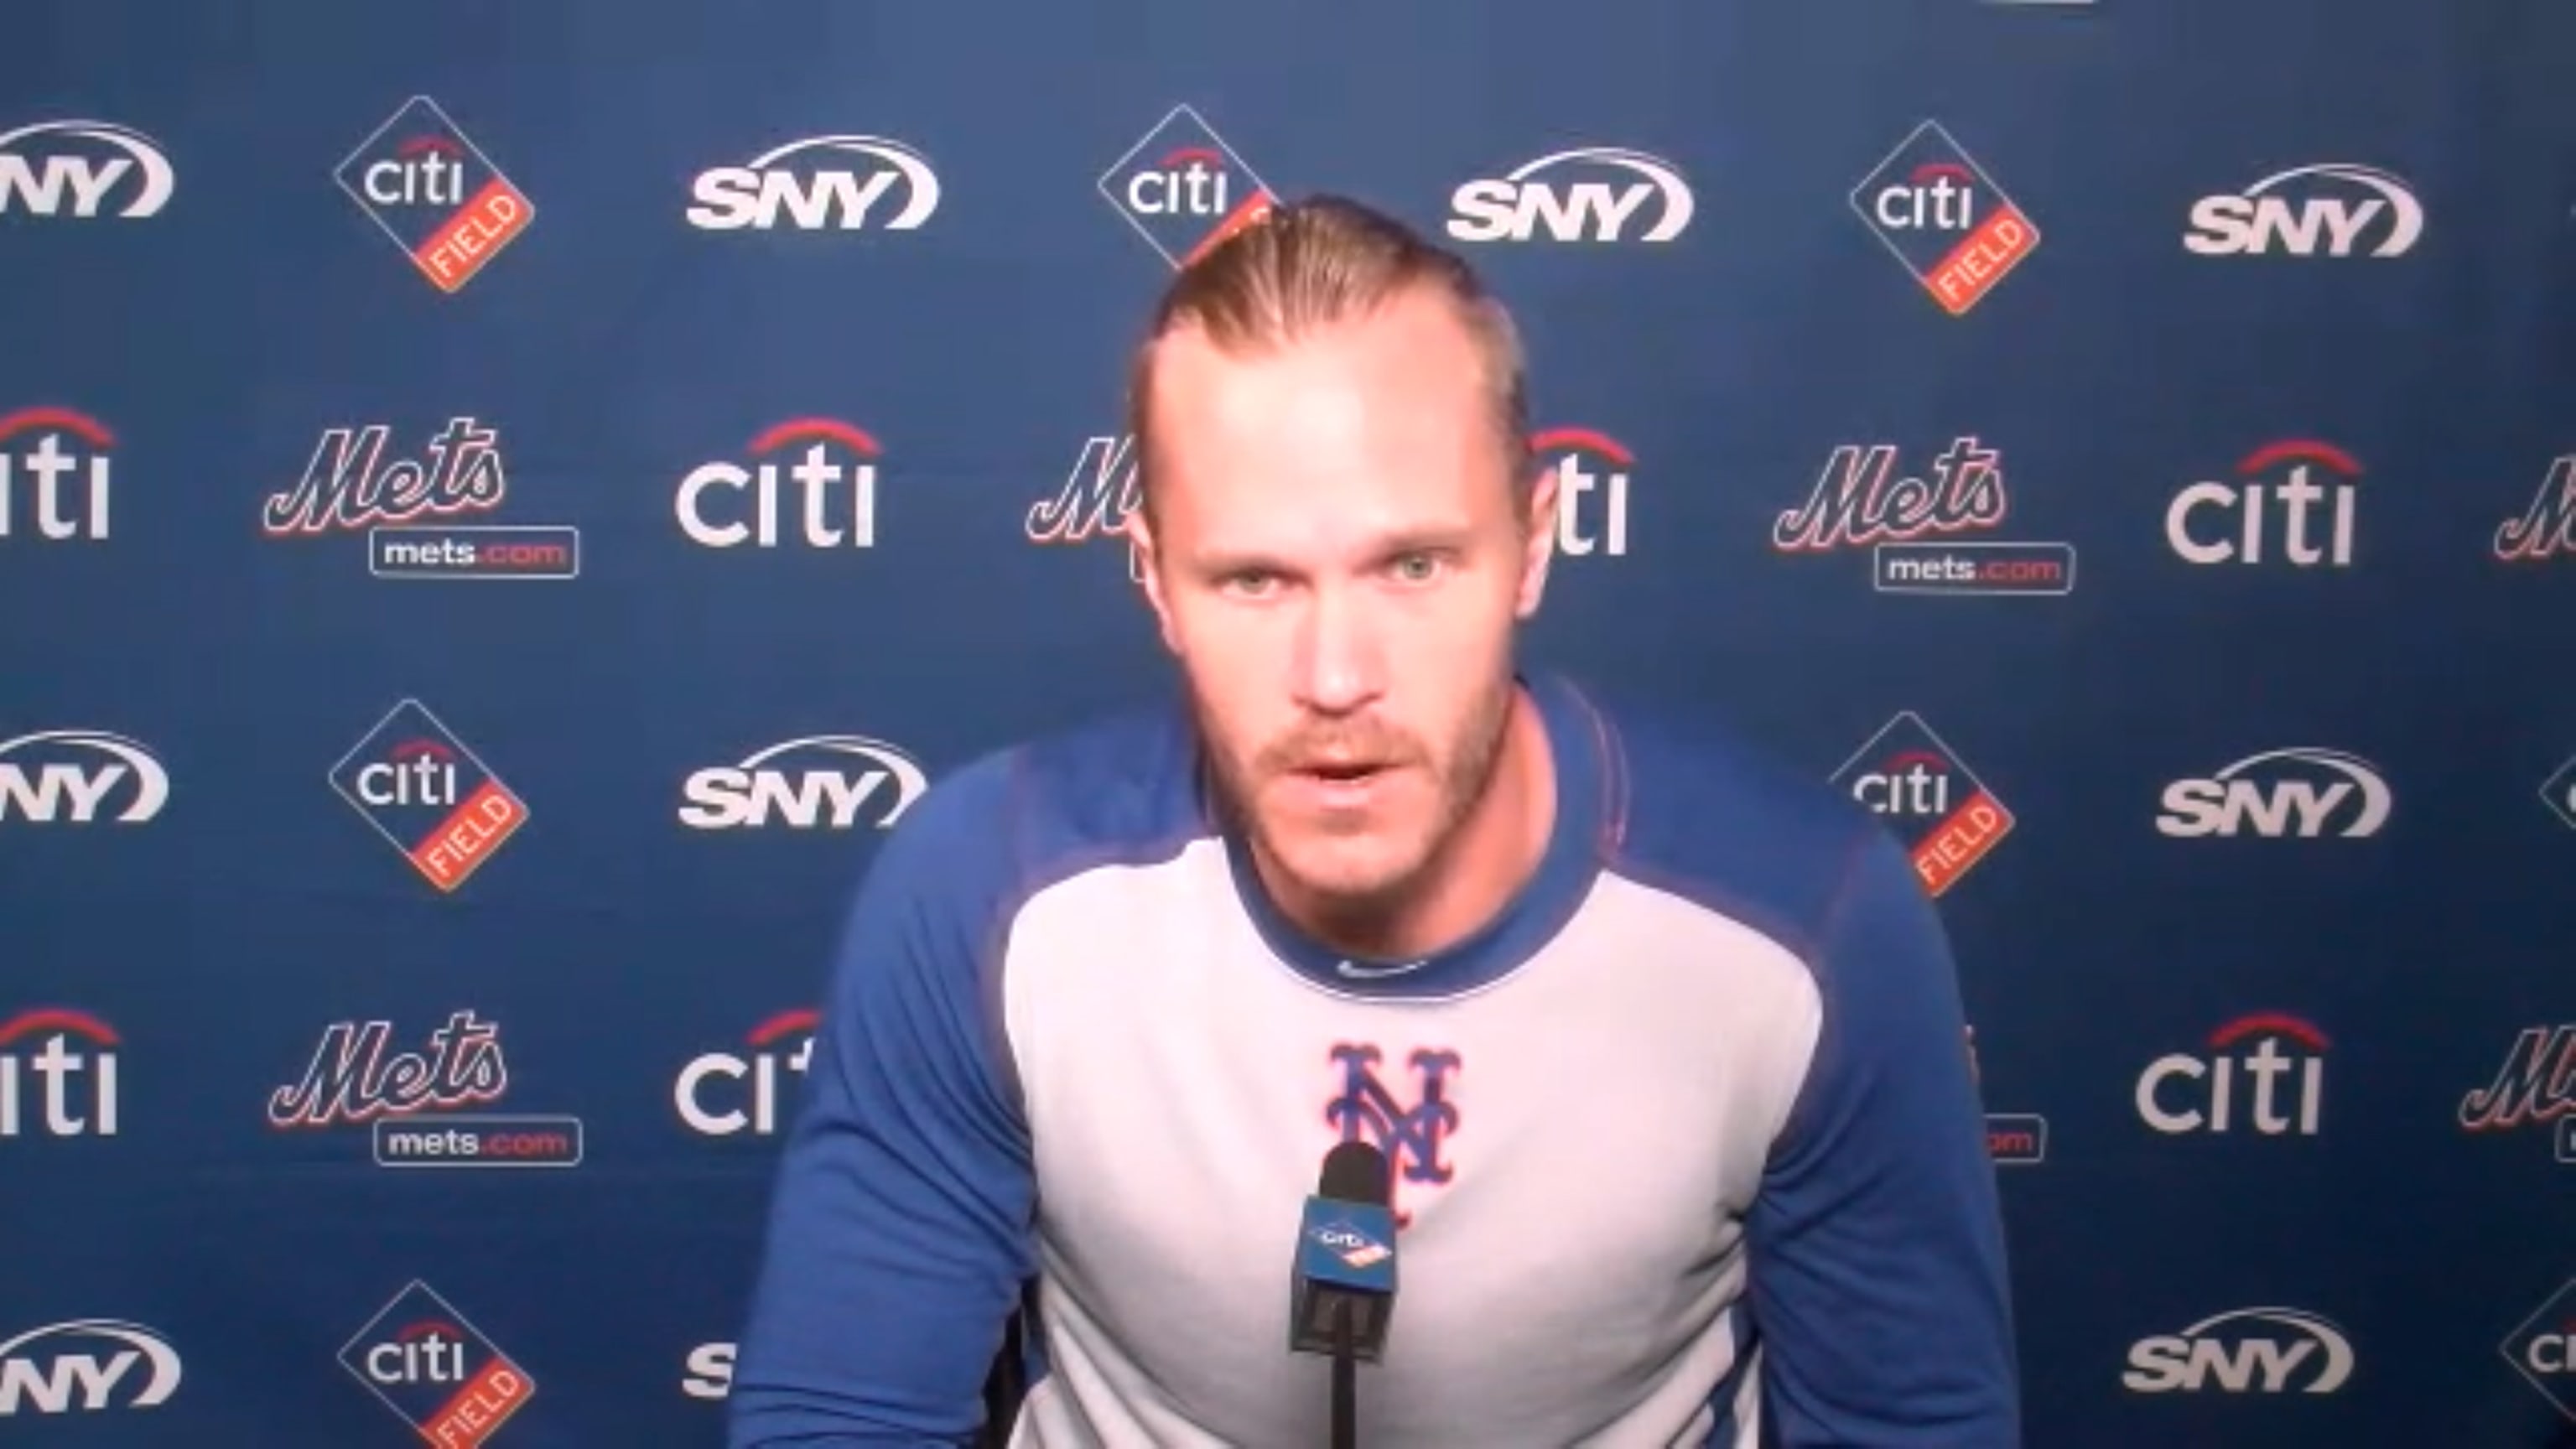 New York Mets - Noah Syndergaard MLB T-Shirt :: FansMania